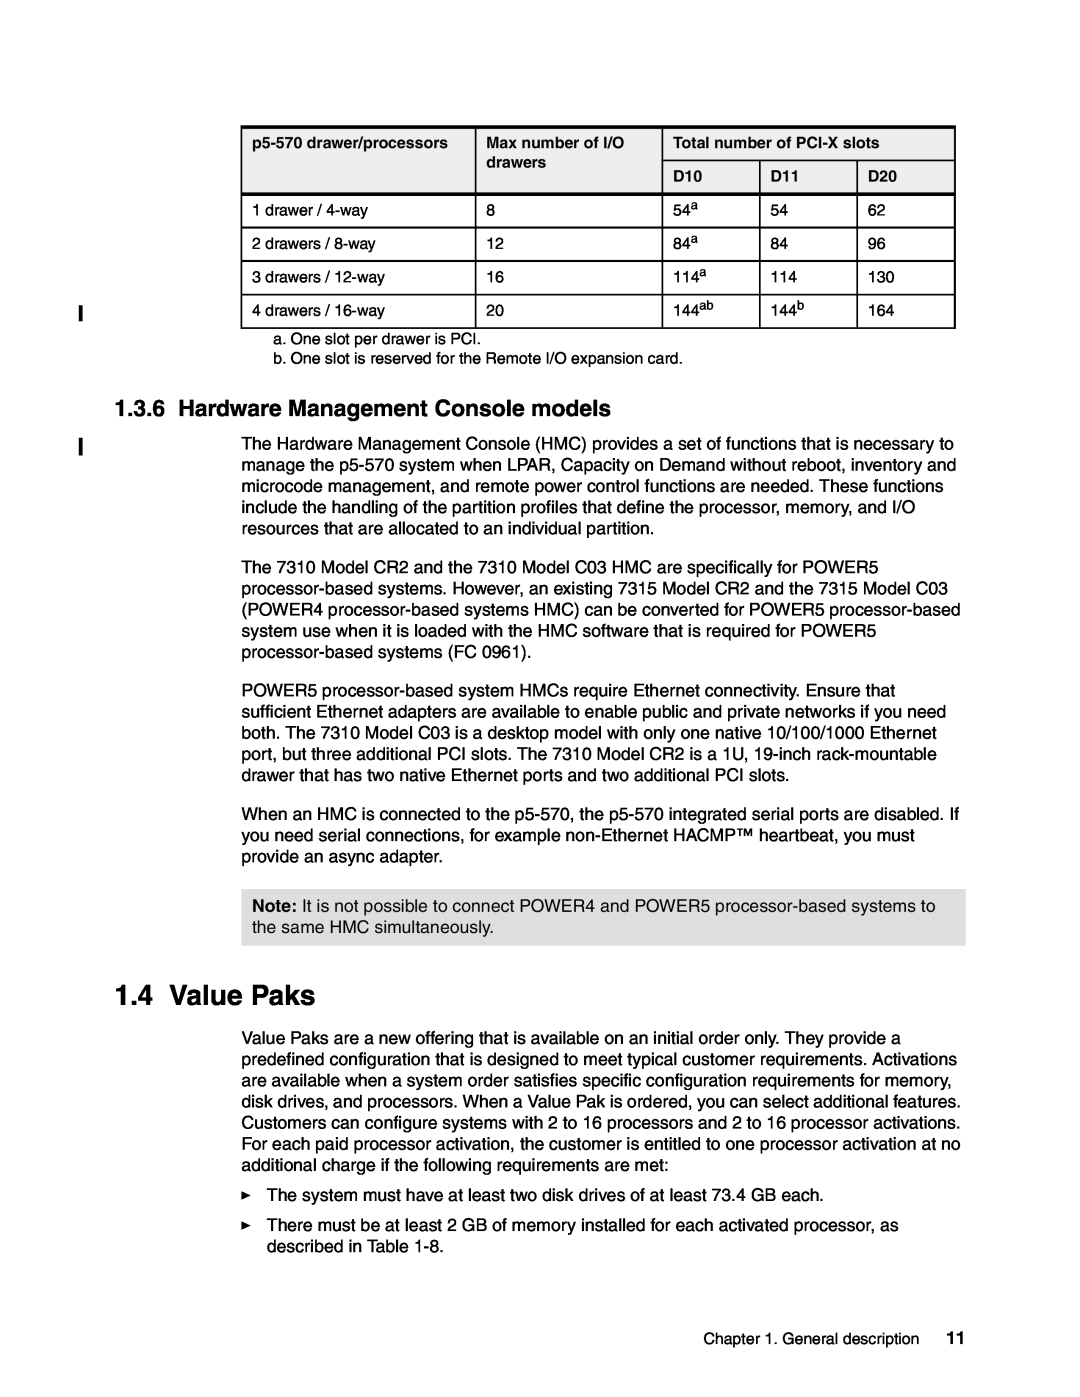 IBM P5 570 manual Value Paks, Hardware Management Console models 